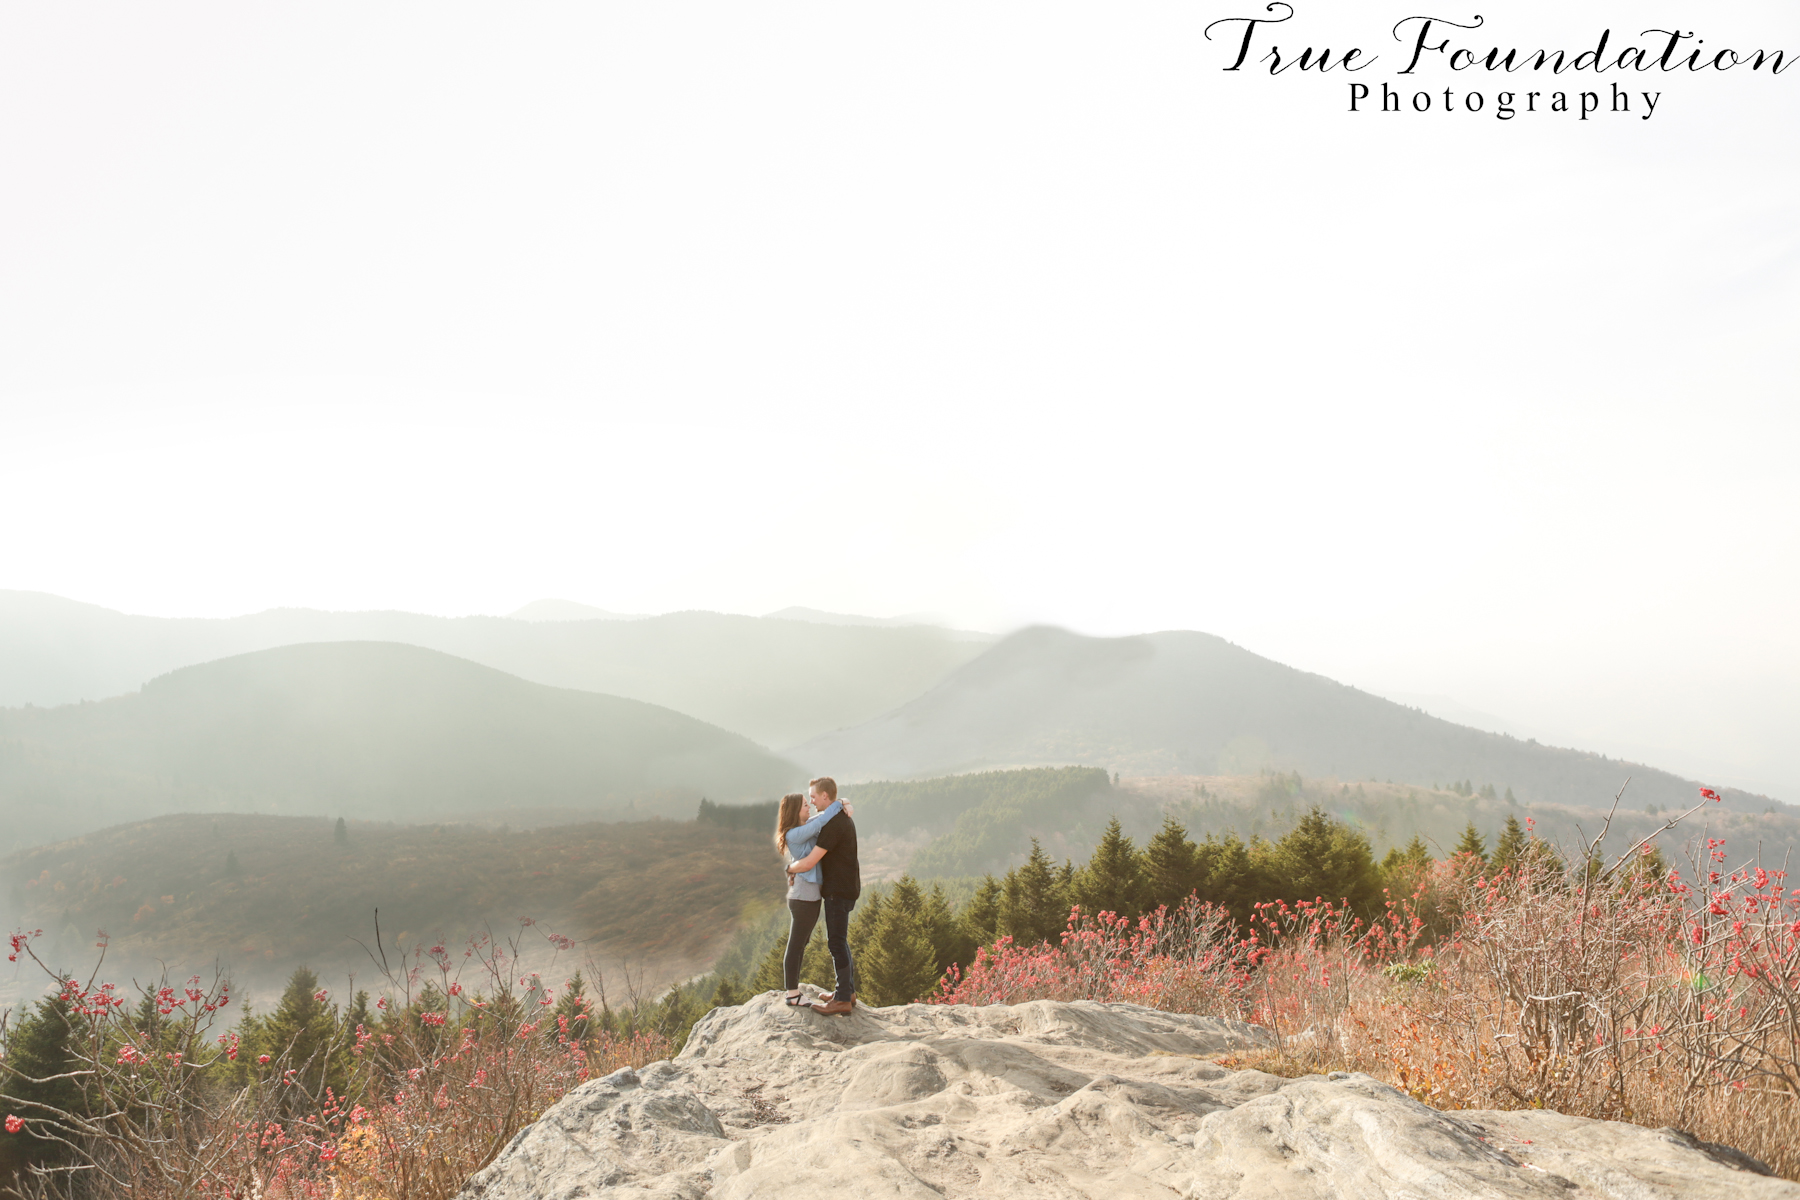 black-balsam-knob-nc-photographer-wedding-engagement-photography-photos-asheville-hendersonville-mountain-engagement-anniversary-couple-hiking-5